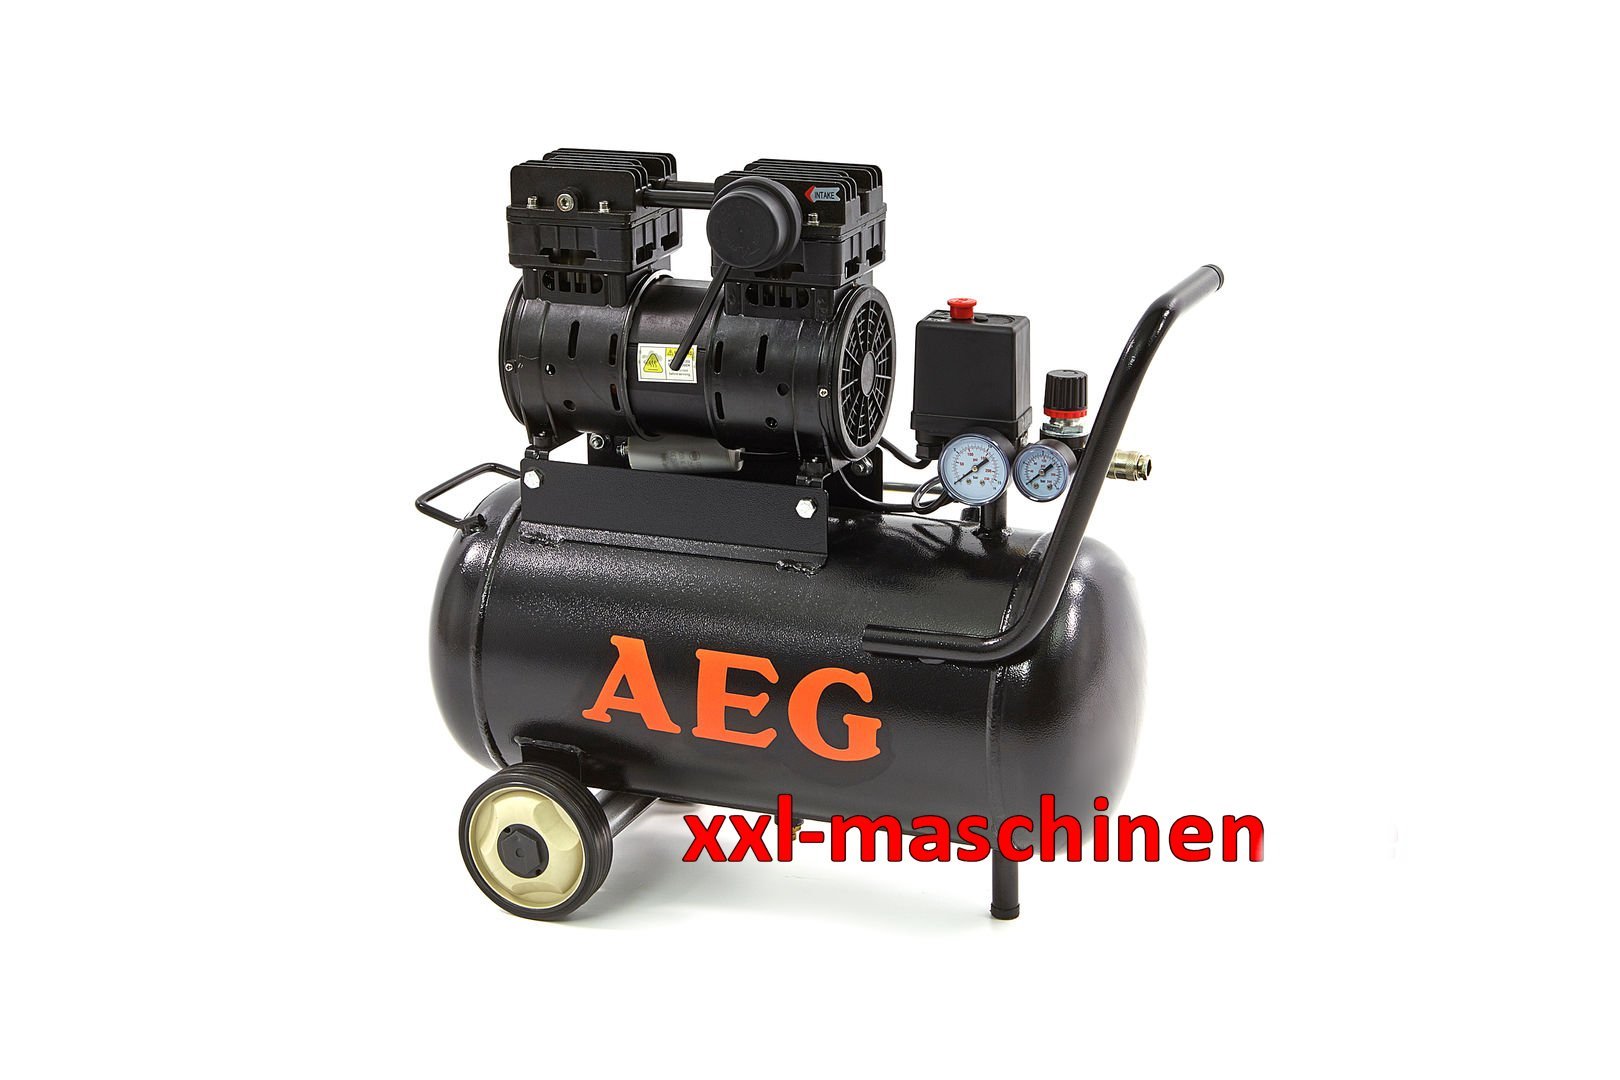            AEG Super leiser Kompressor mit 24 Liter Kessel  